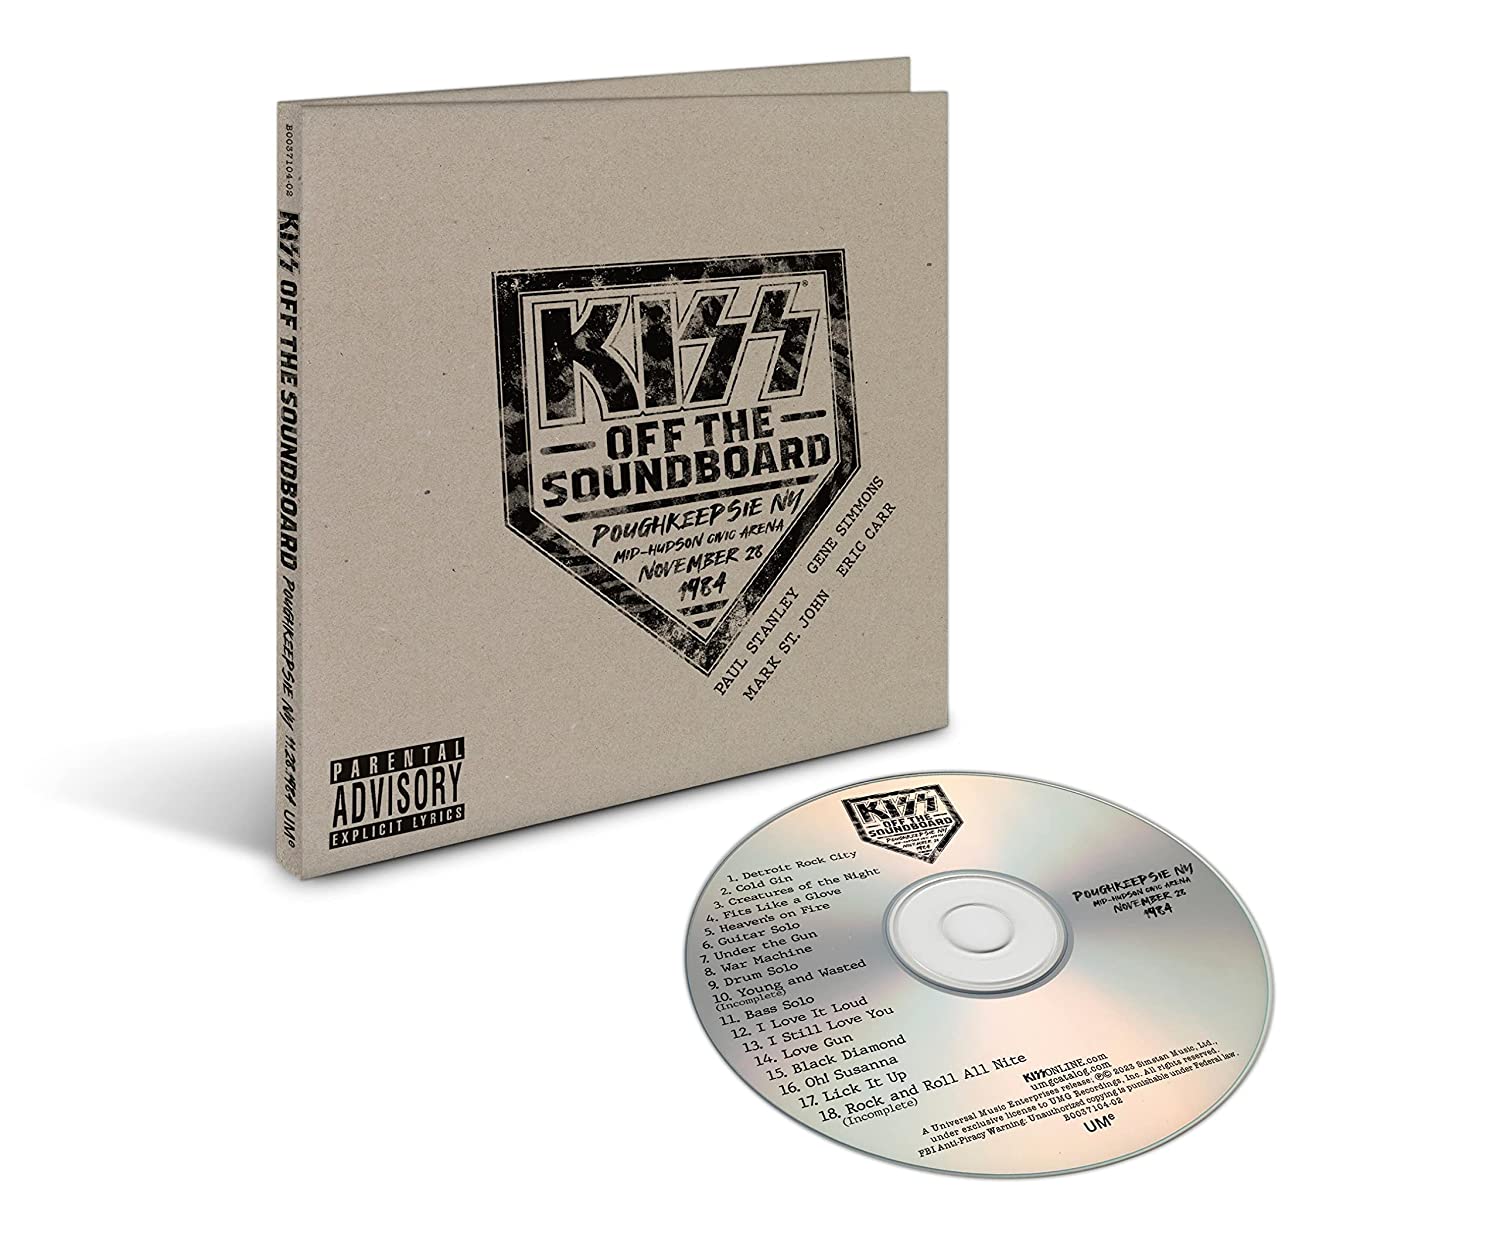 KISS Off The Soundboard Poughkeepsie NY 1984 CD [Importado]